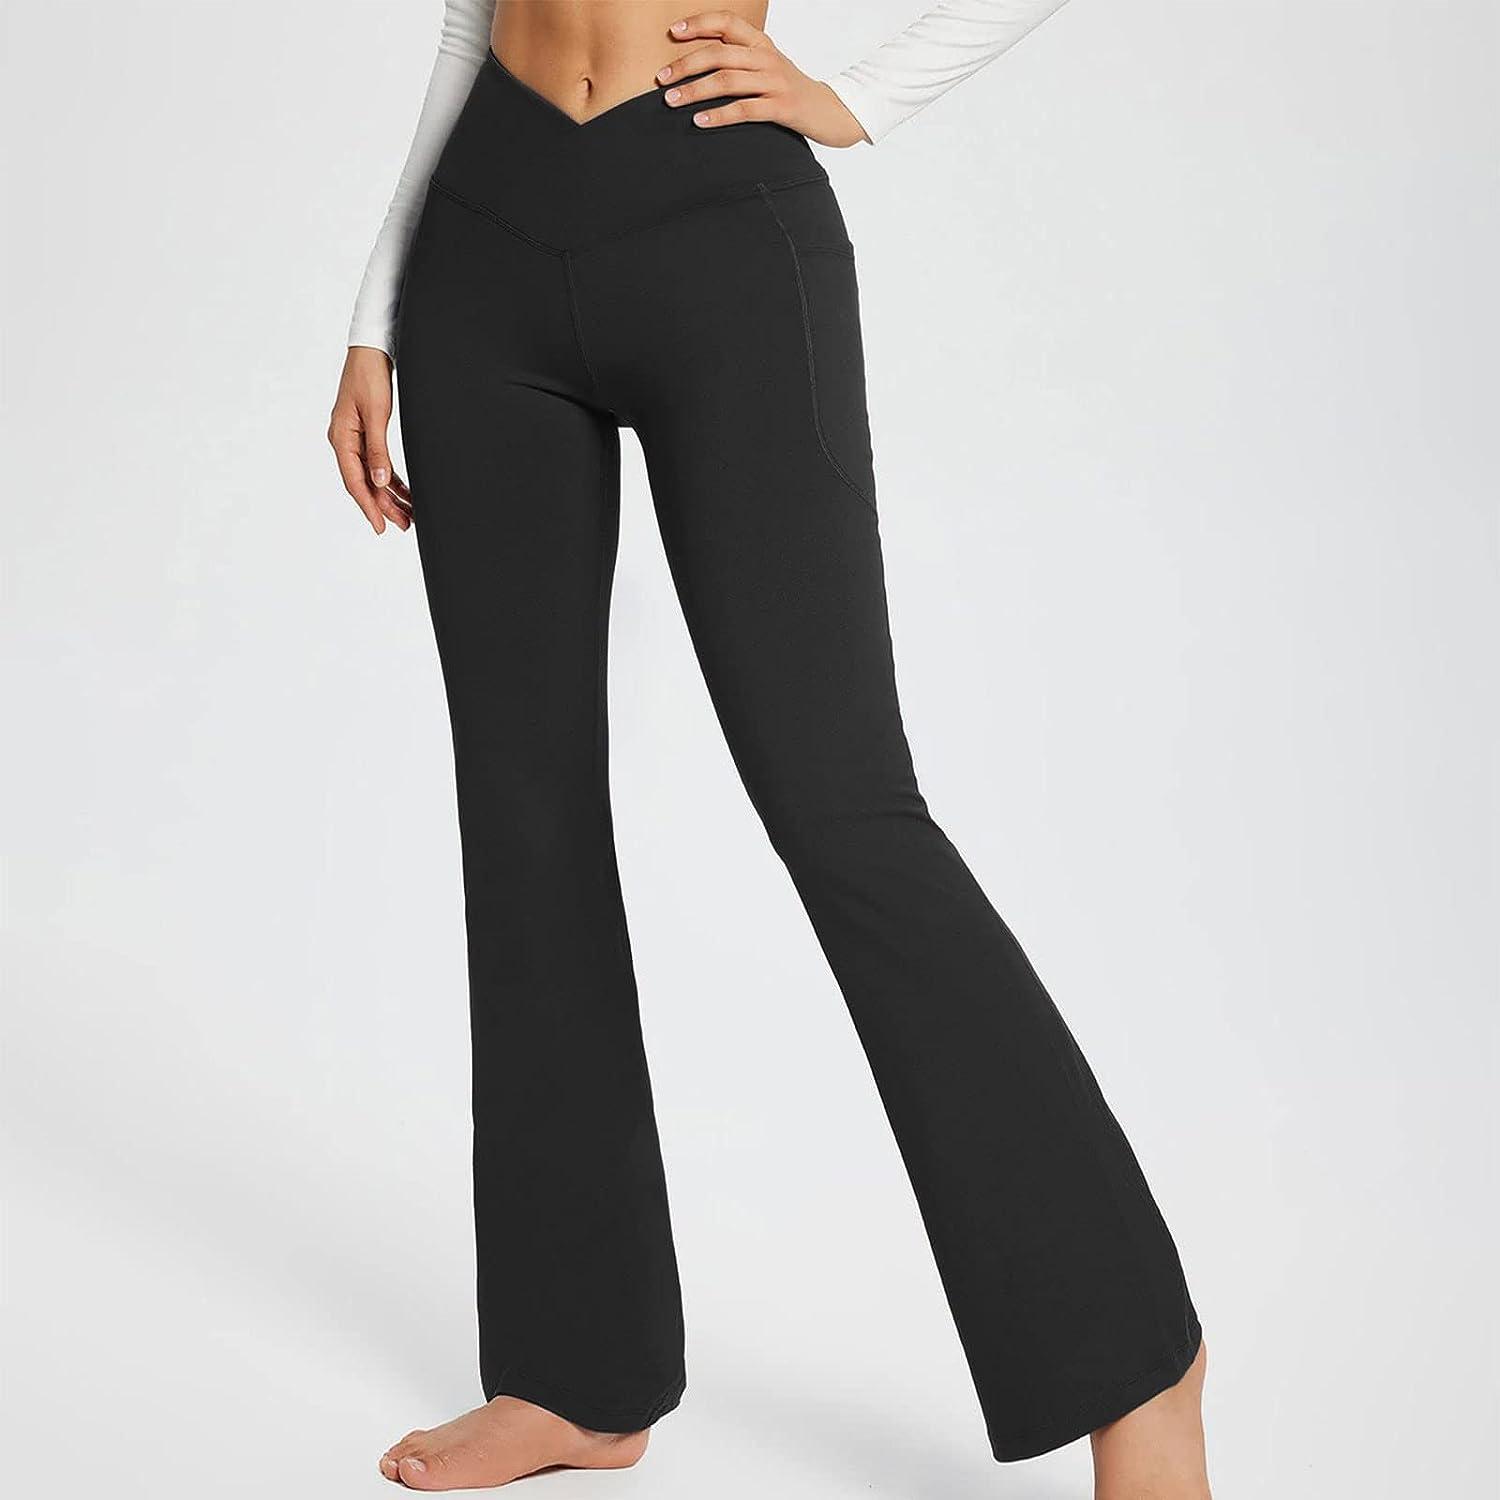 ESCBUKI Flare Yoga Pants for Women High Waist Solid Color Tummy